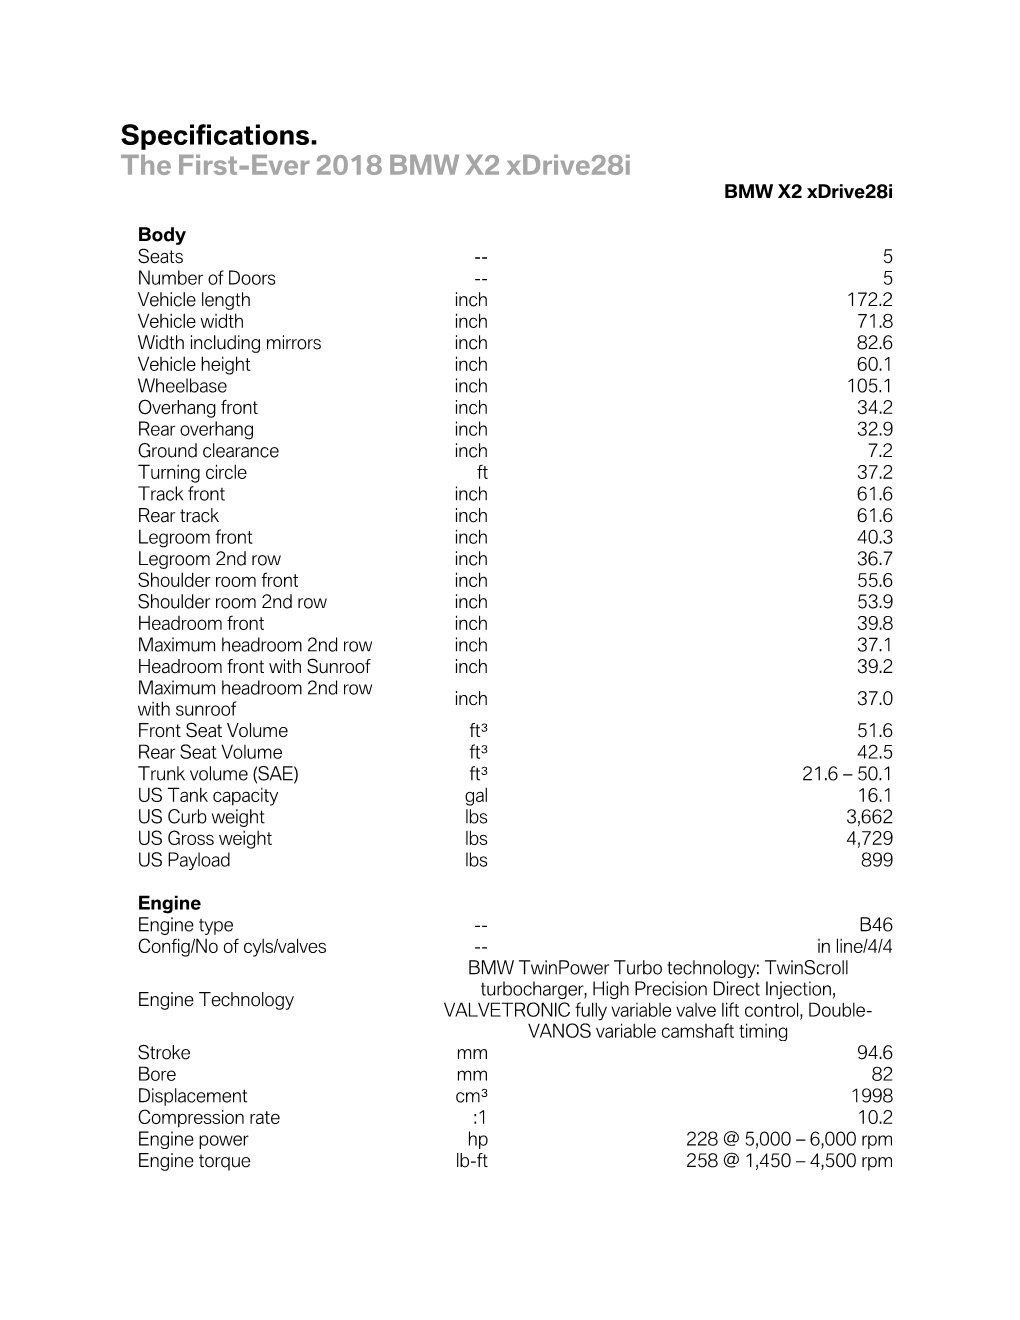 2018 BMW X2 Specifications